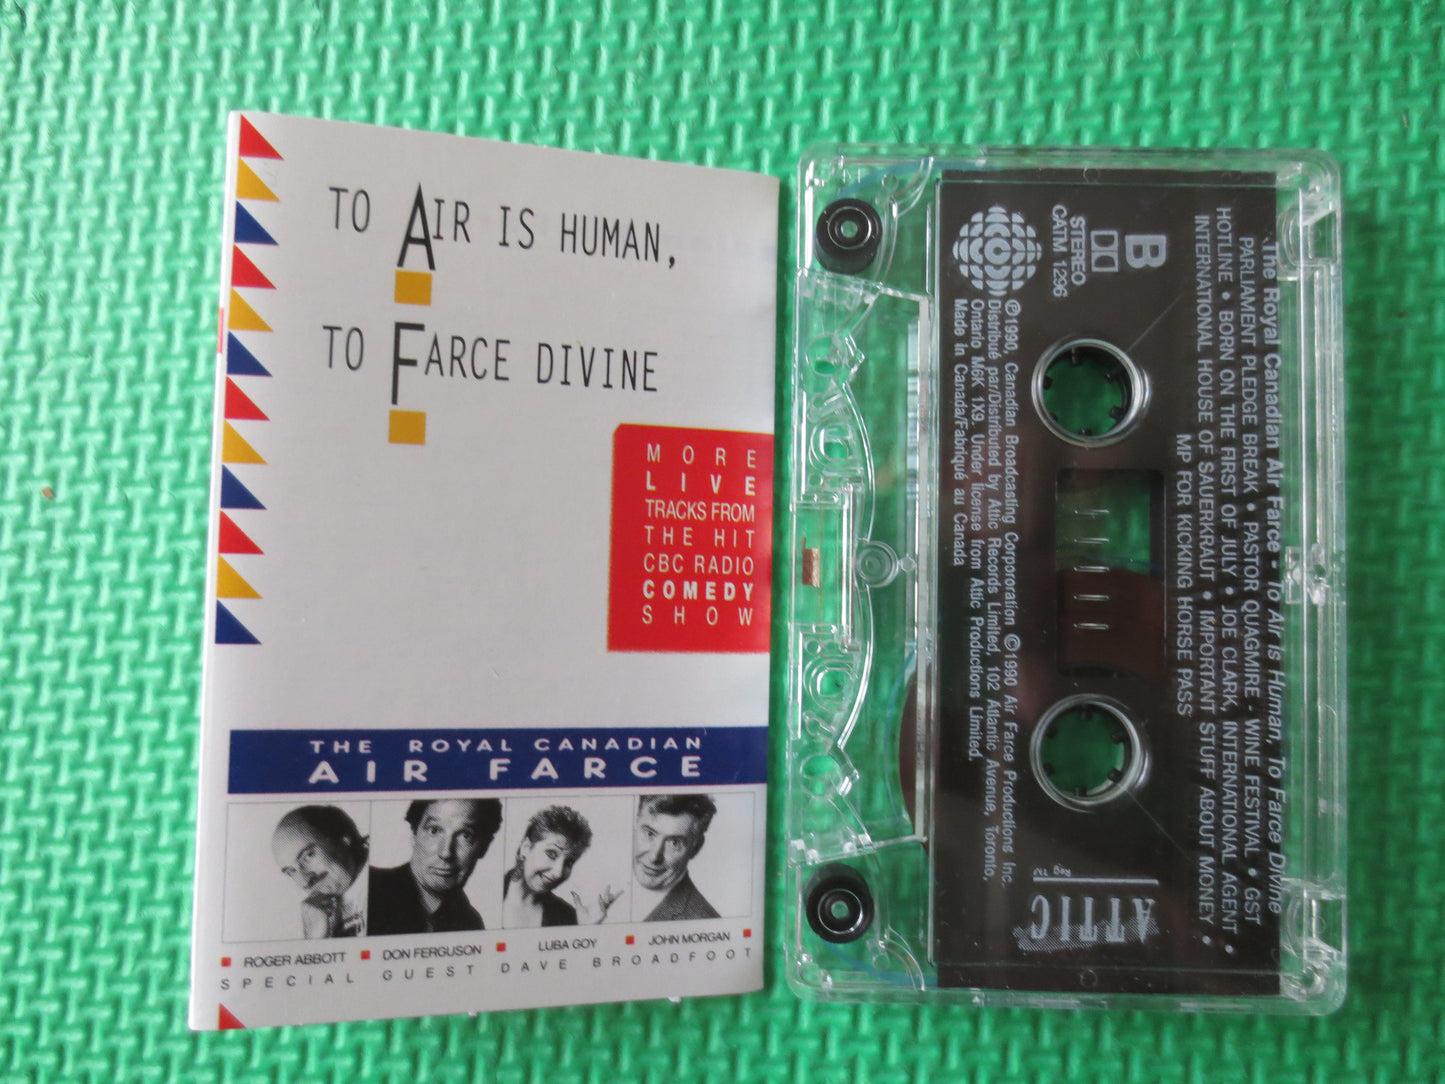 AIR FARCE, COMEDY Tape, Classic Comedy, Air Farce Cassette, Comedy Cassettes, Air Farce Tapes, Cassette, Tape, 1990 Cassette